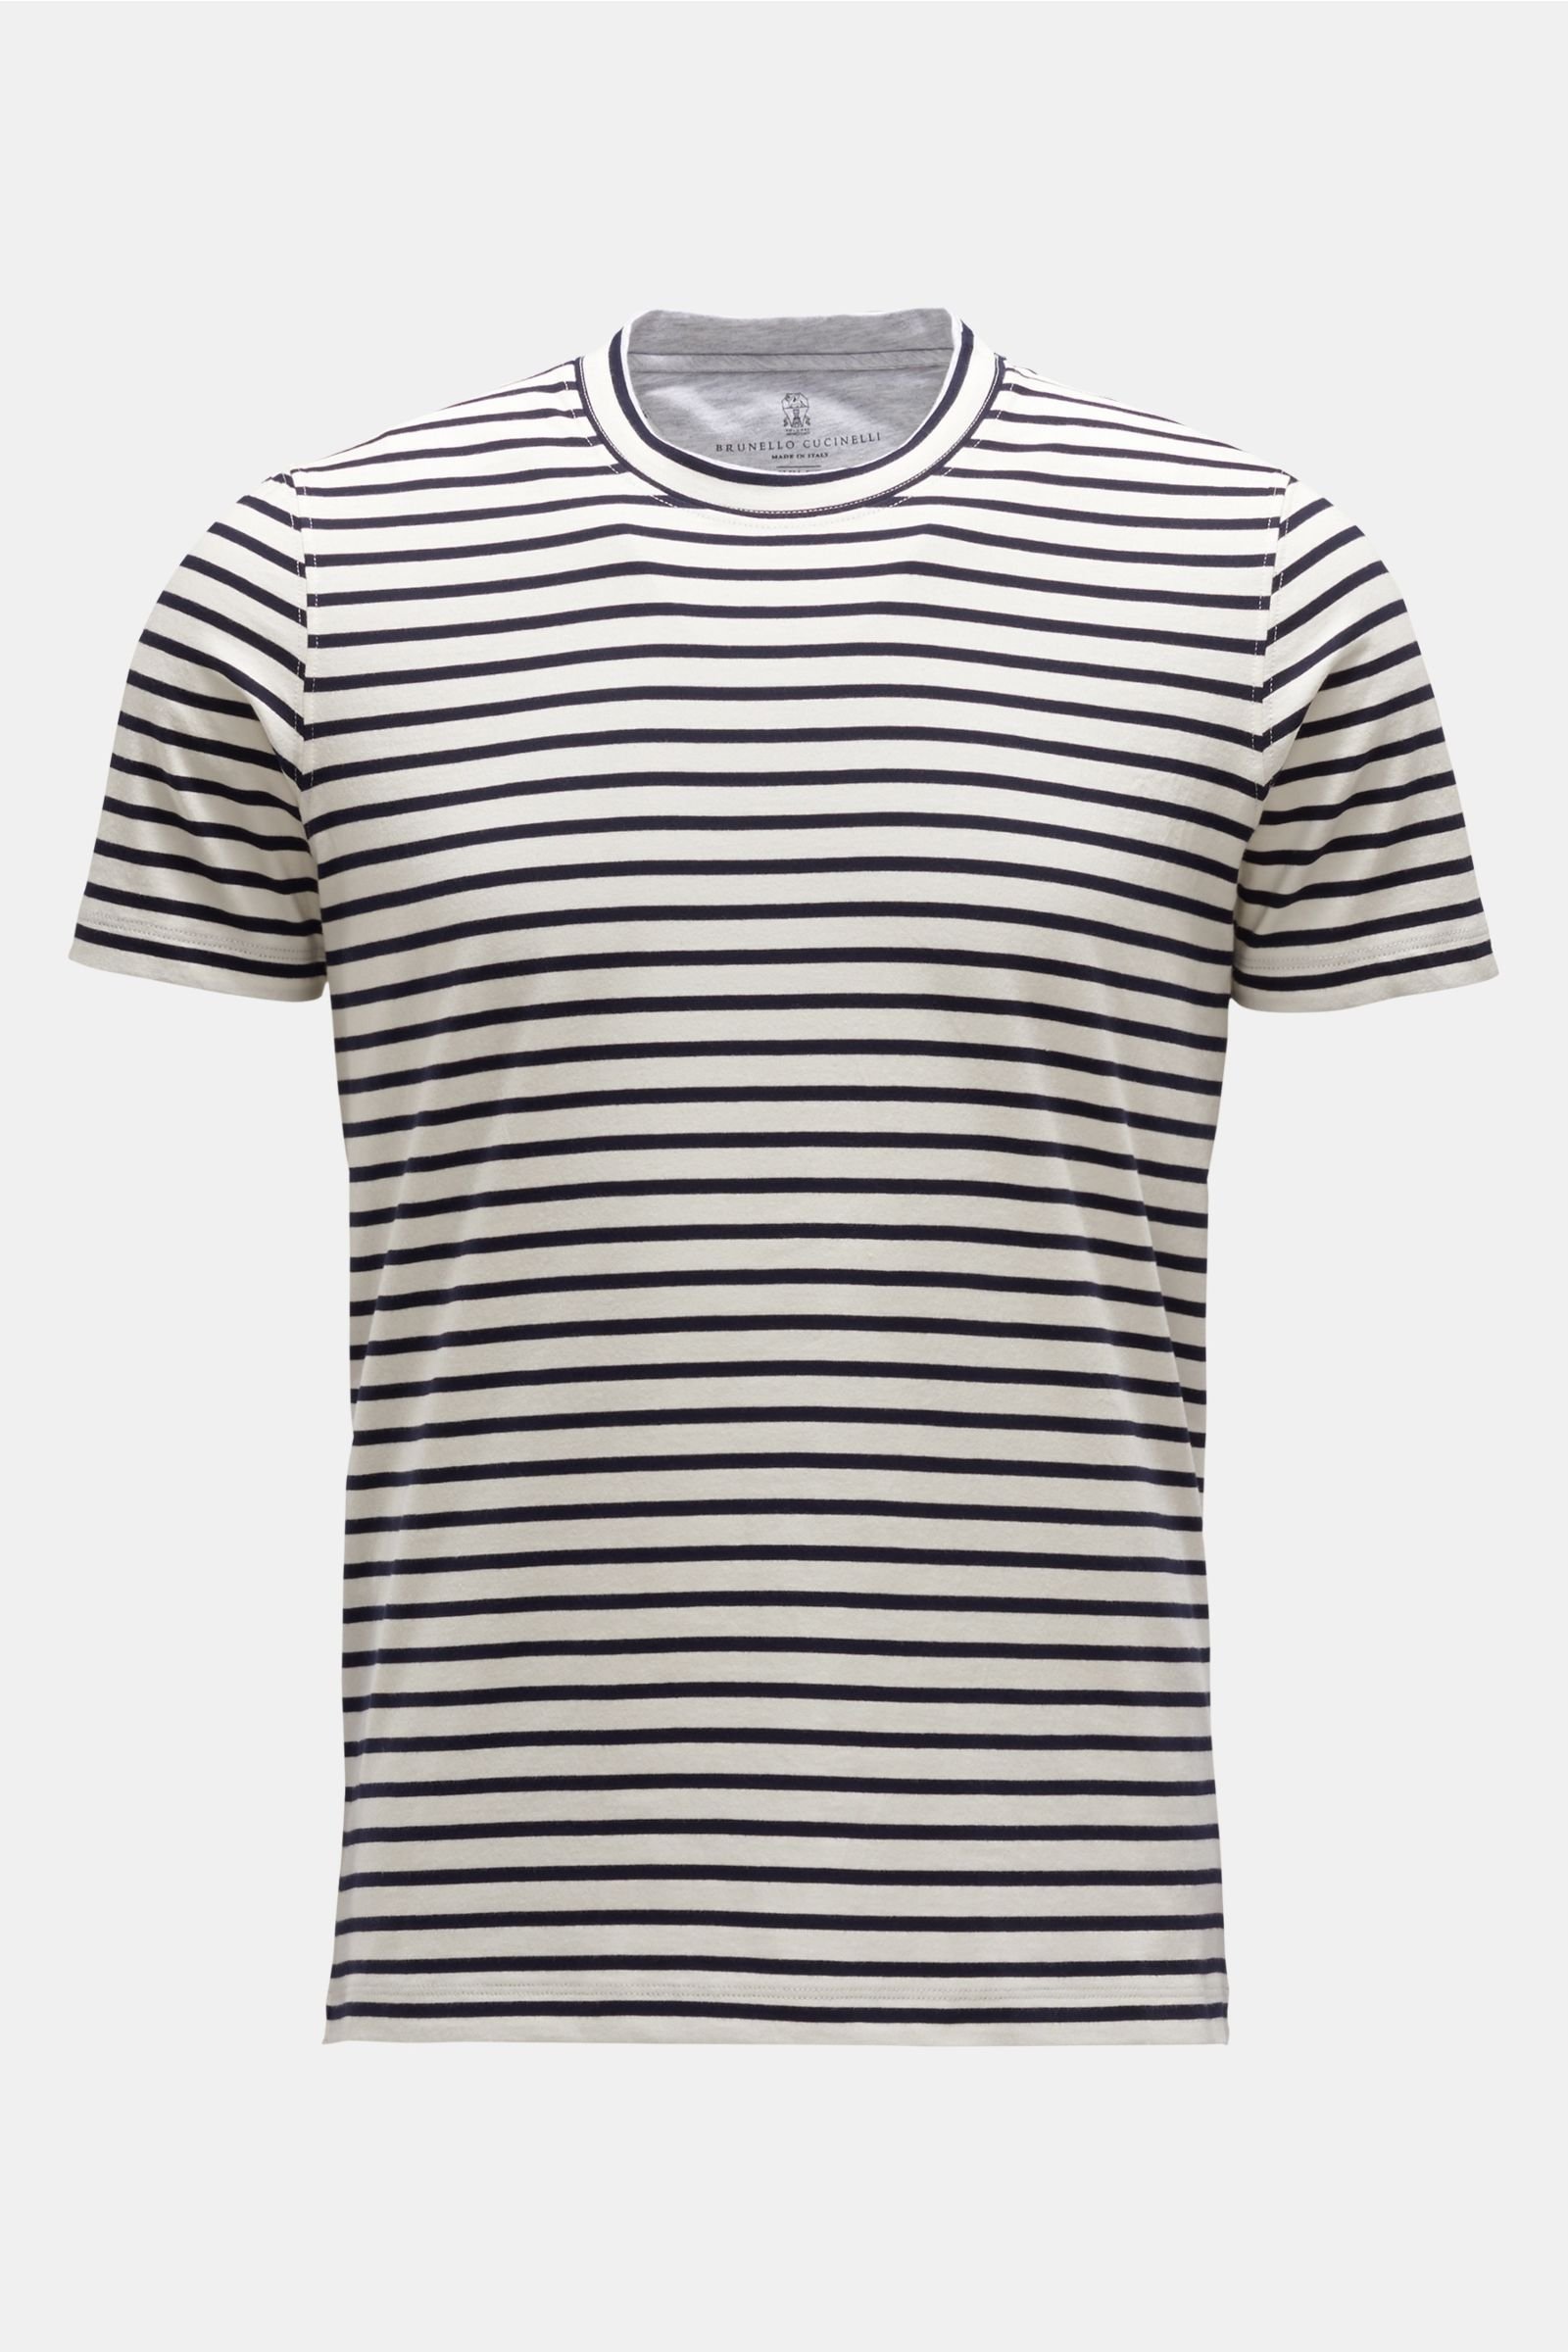 Crew neck T-shirt navy/off-white striped